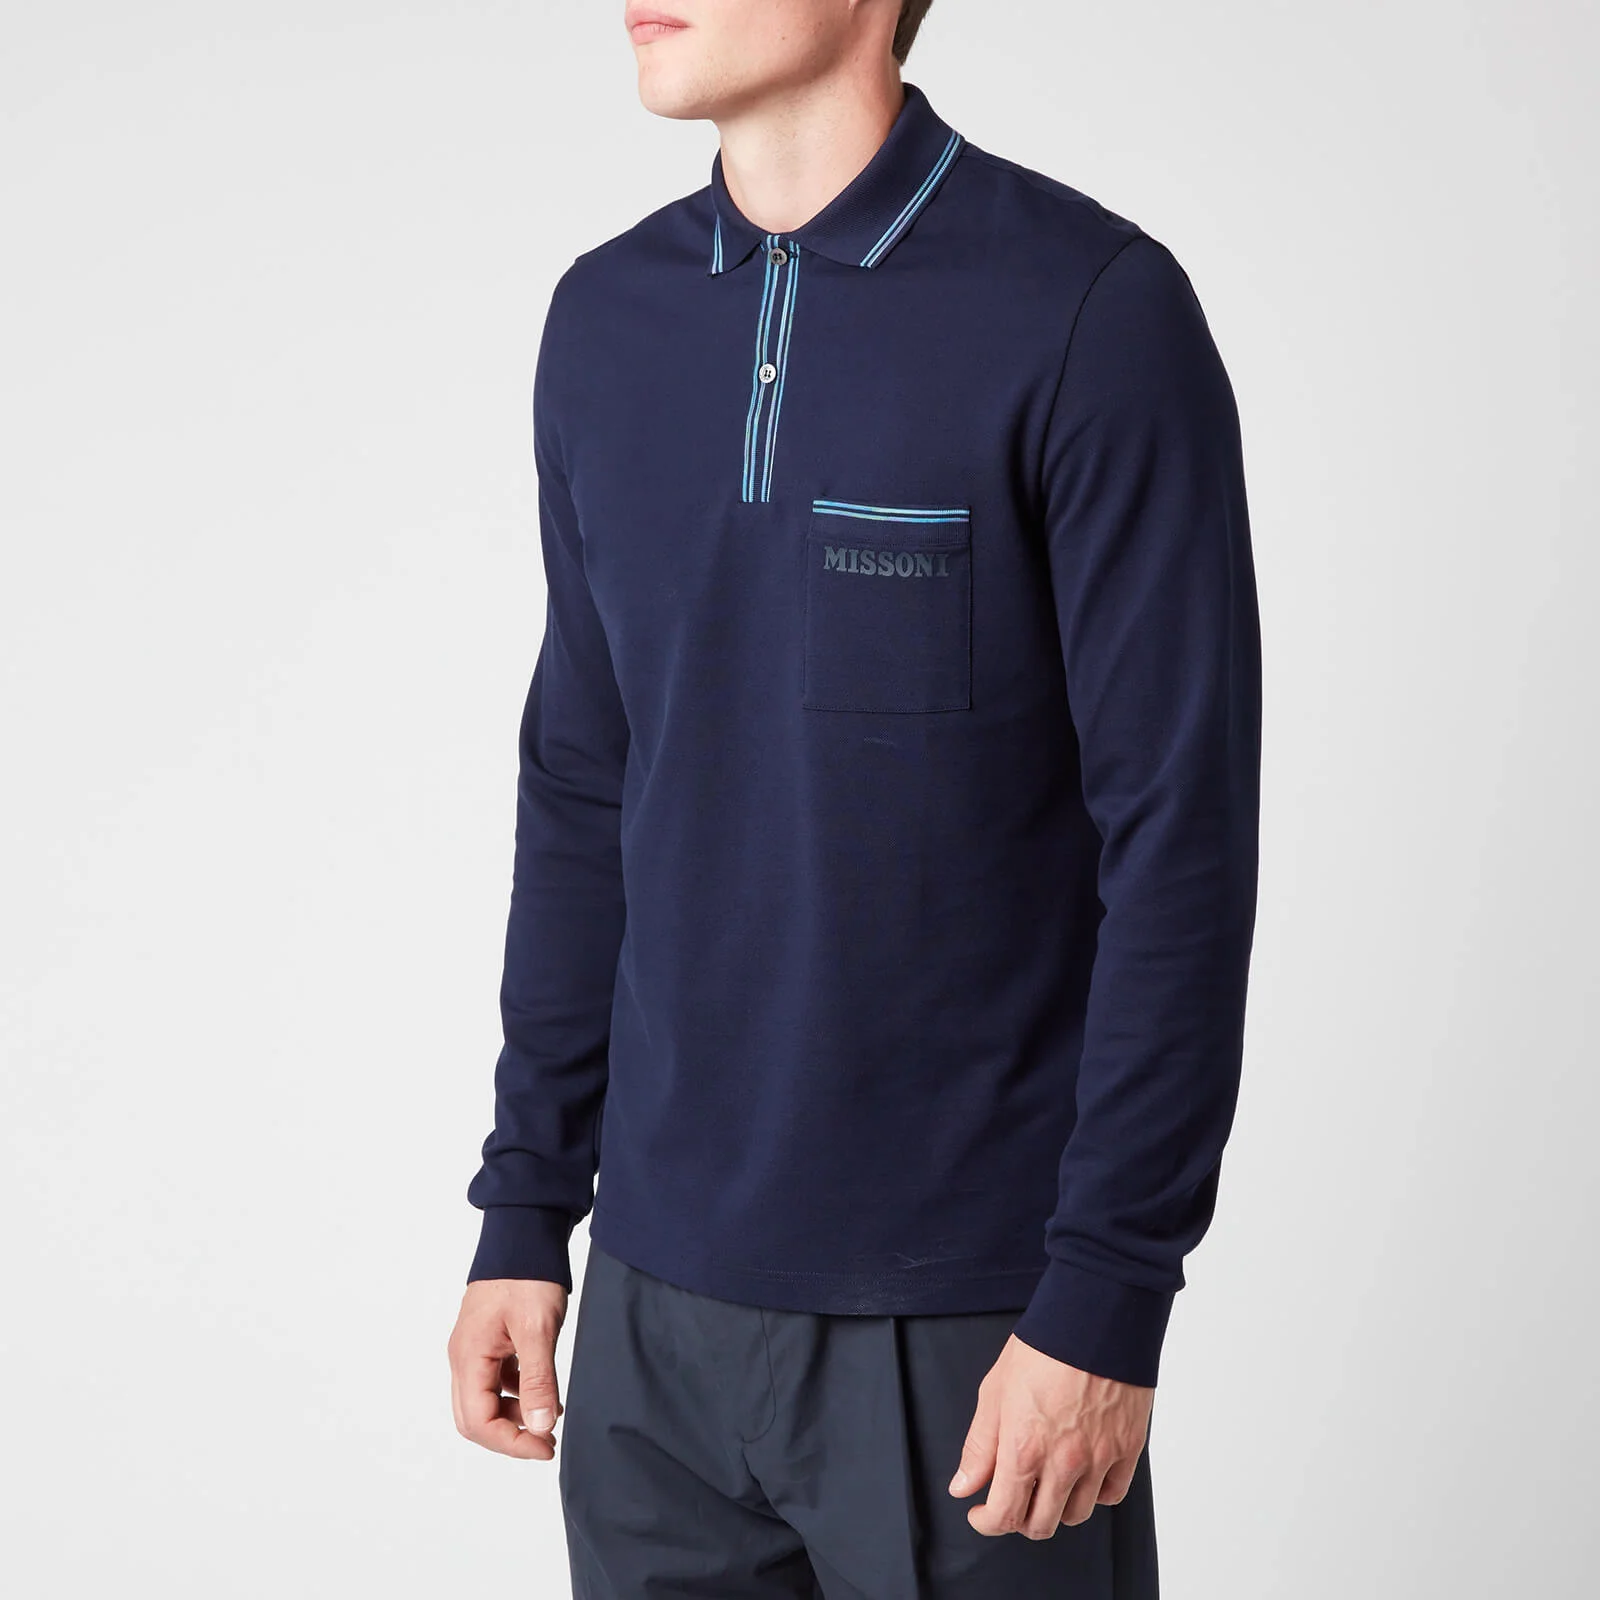 Missoni Men's Long Sleeve Chest Pocket Polo Shirt - Navy Image 1